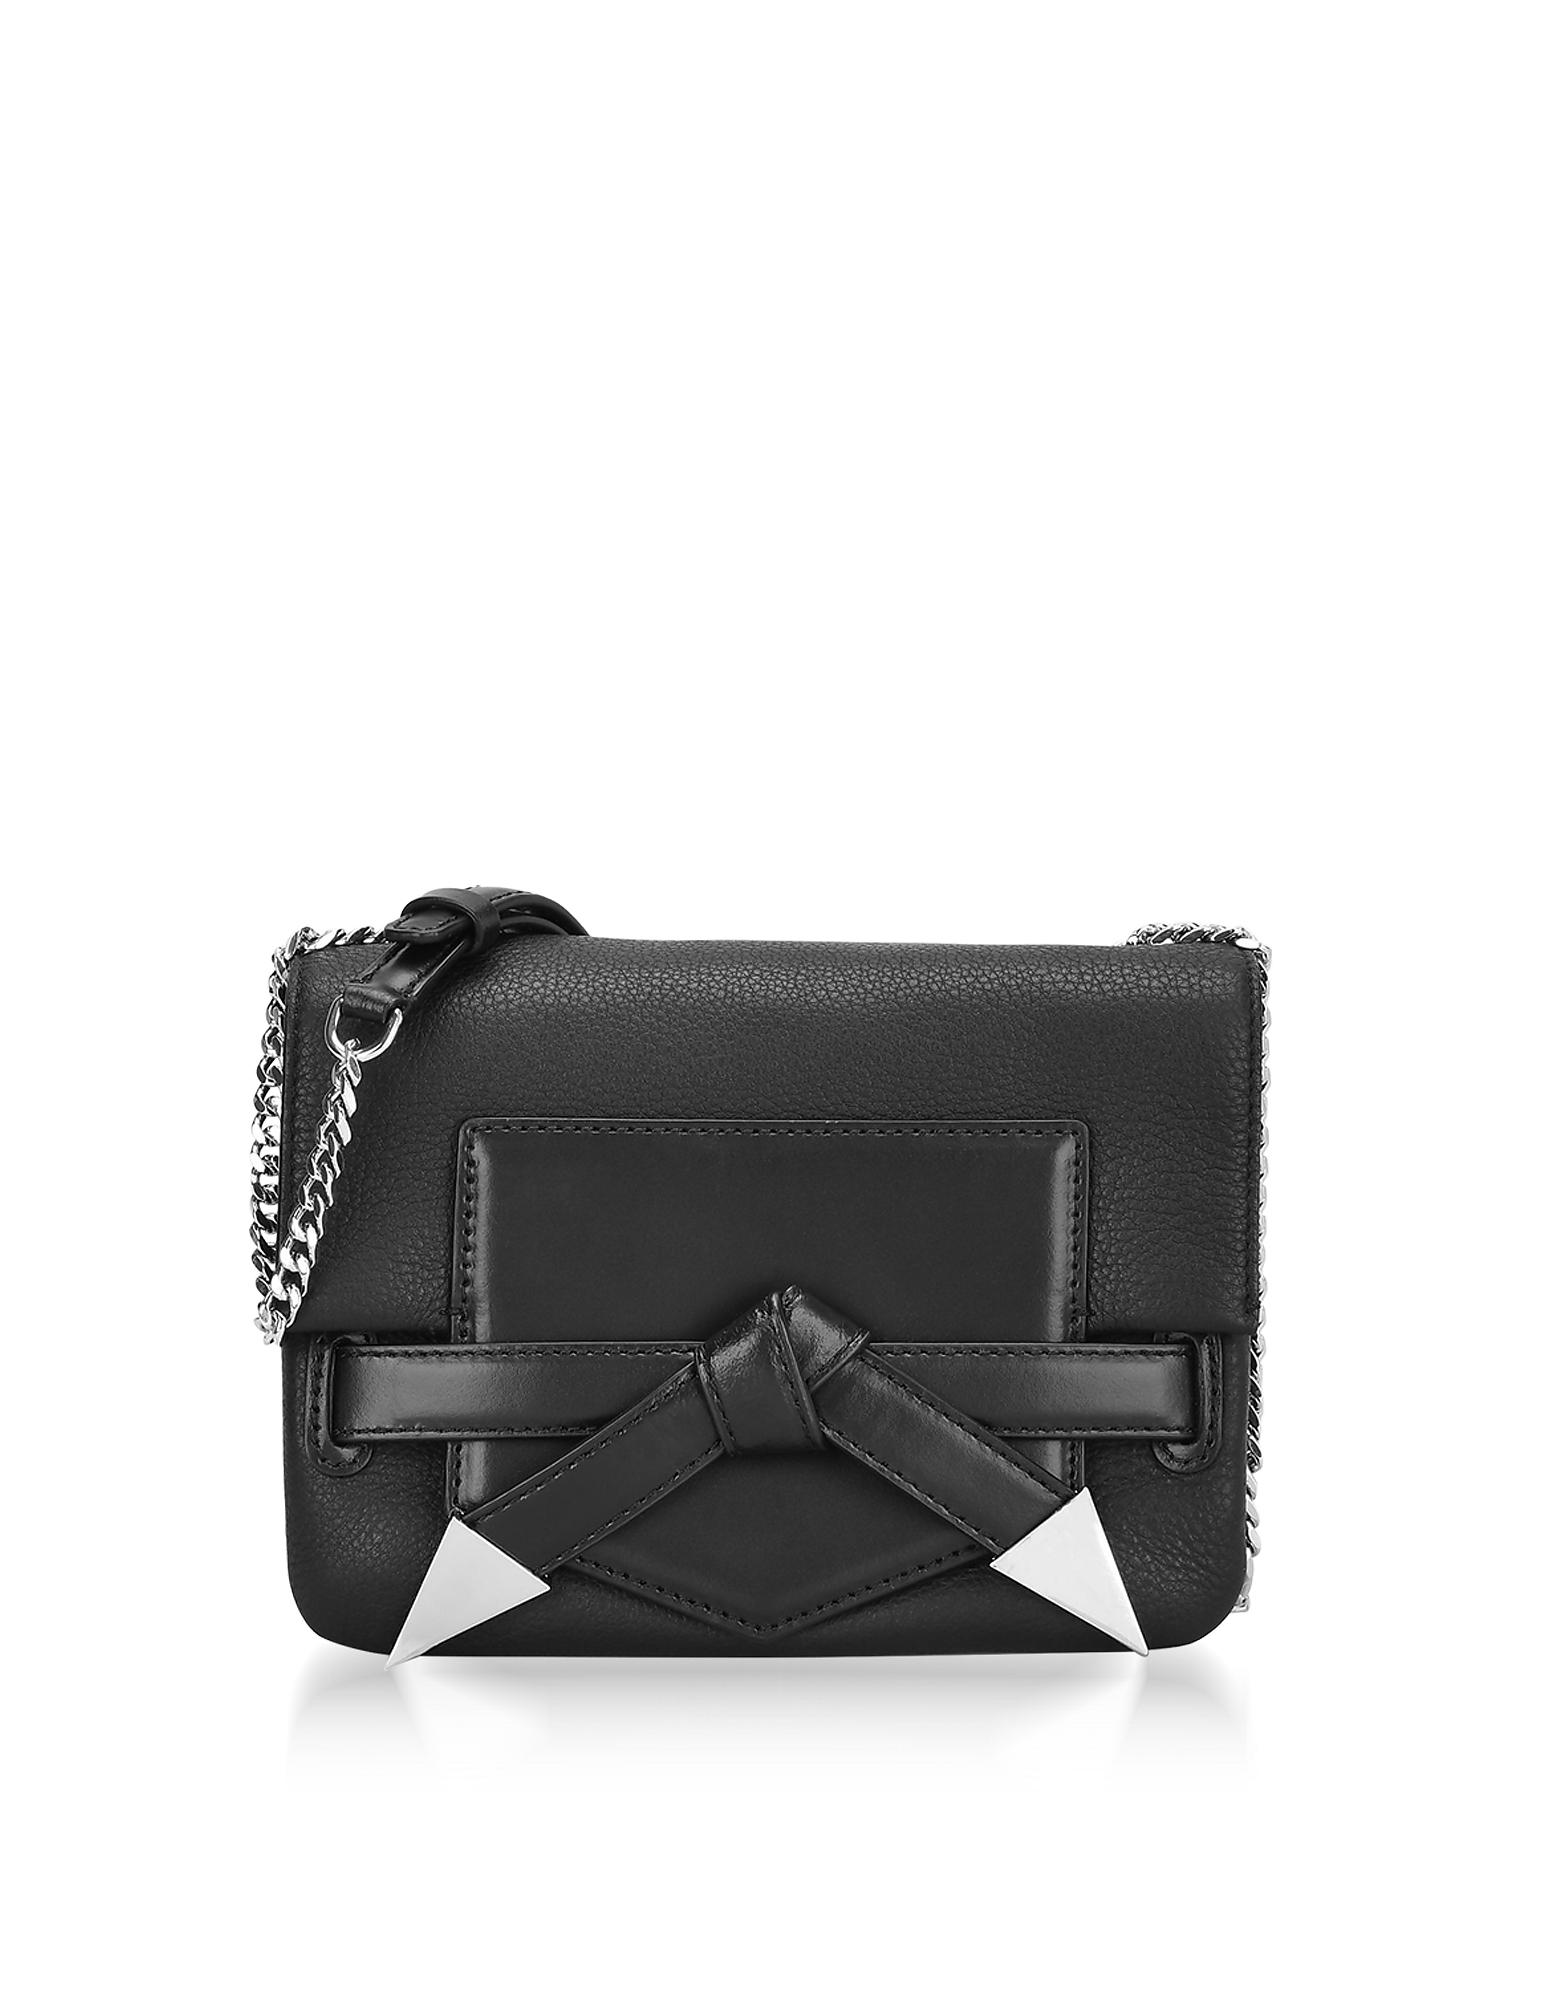 Karl Lagerfeld Black Leather K/rocky Bow Crossbody Bag - Lyst